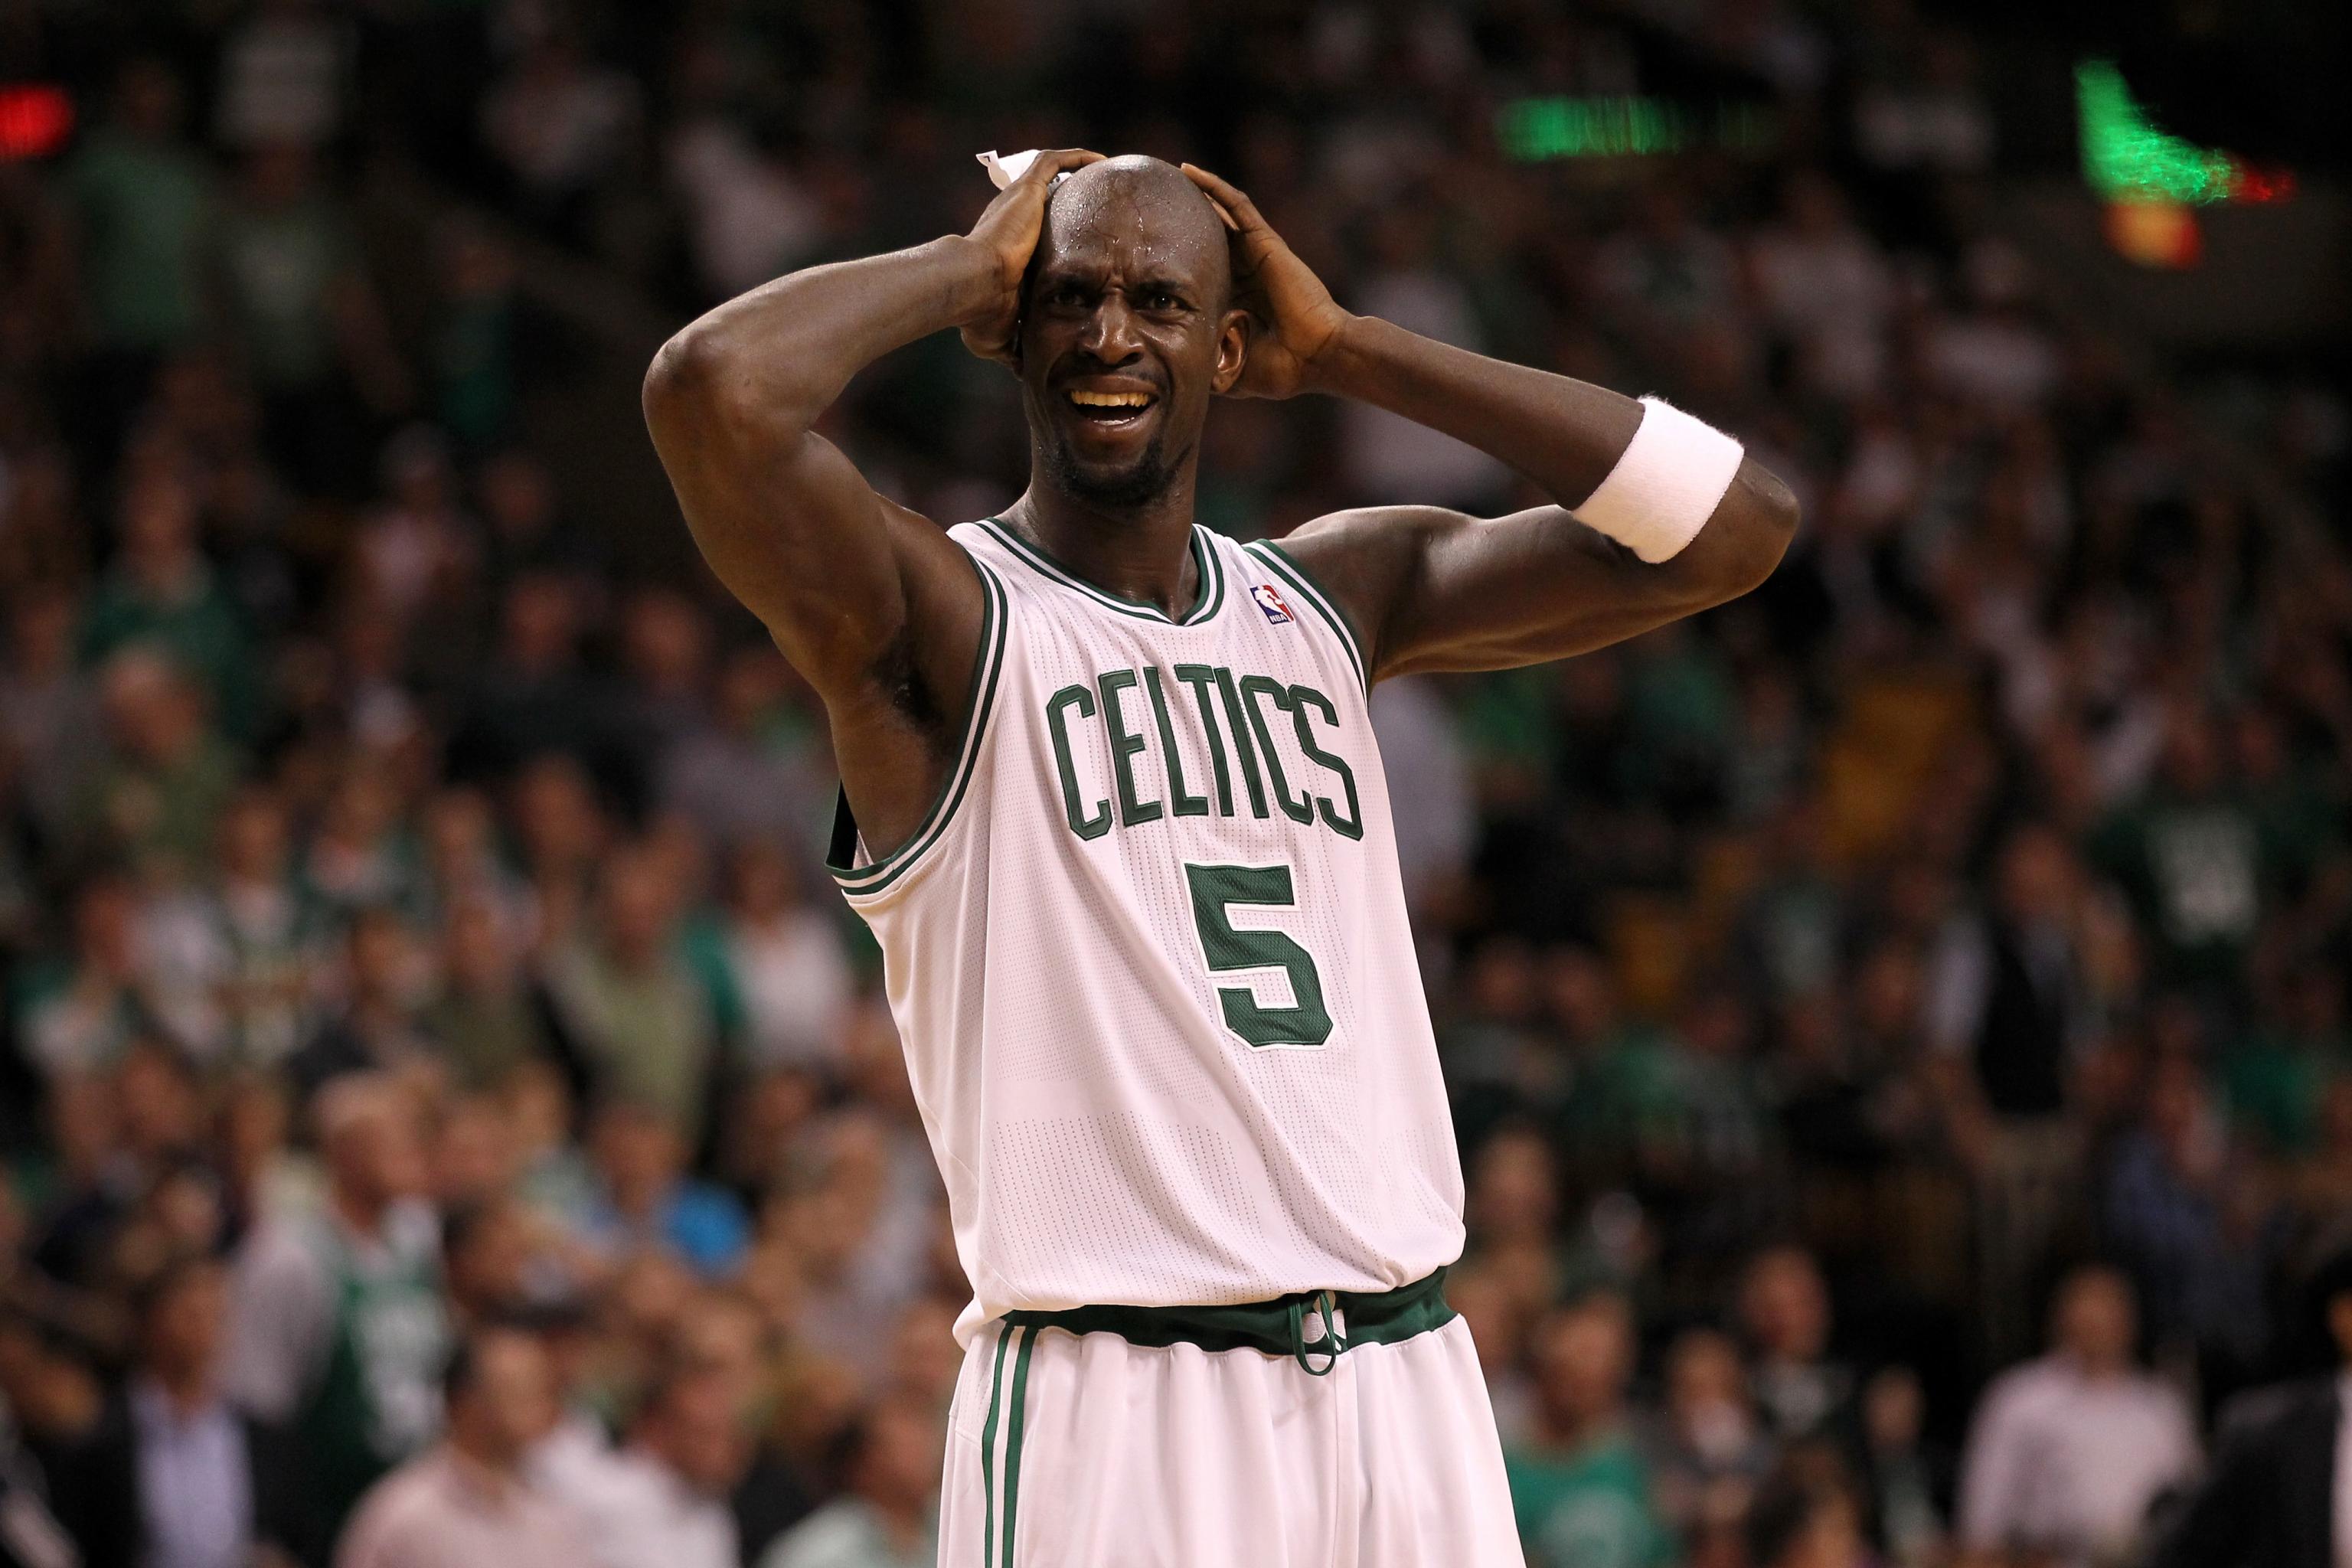 Rumor: Celtics F Kevin Garnett to consider retirement after playoffs? 